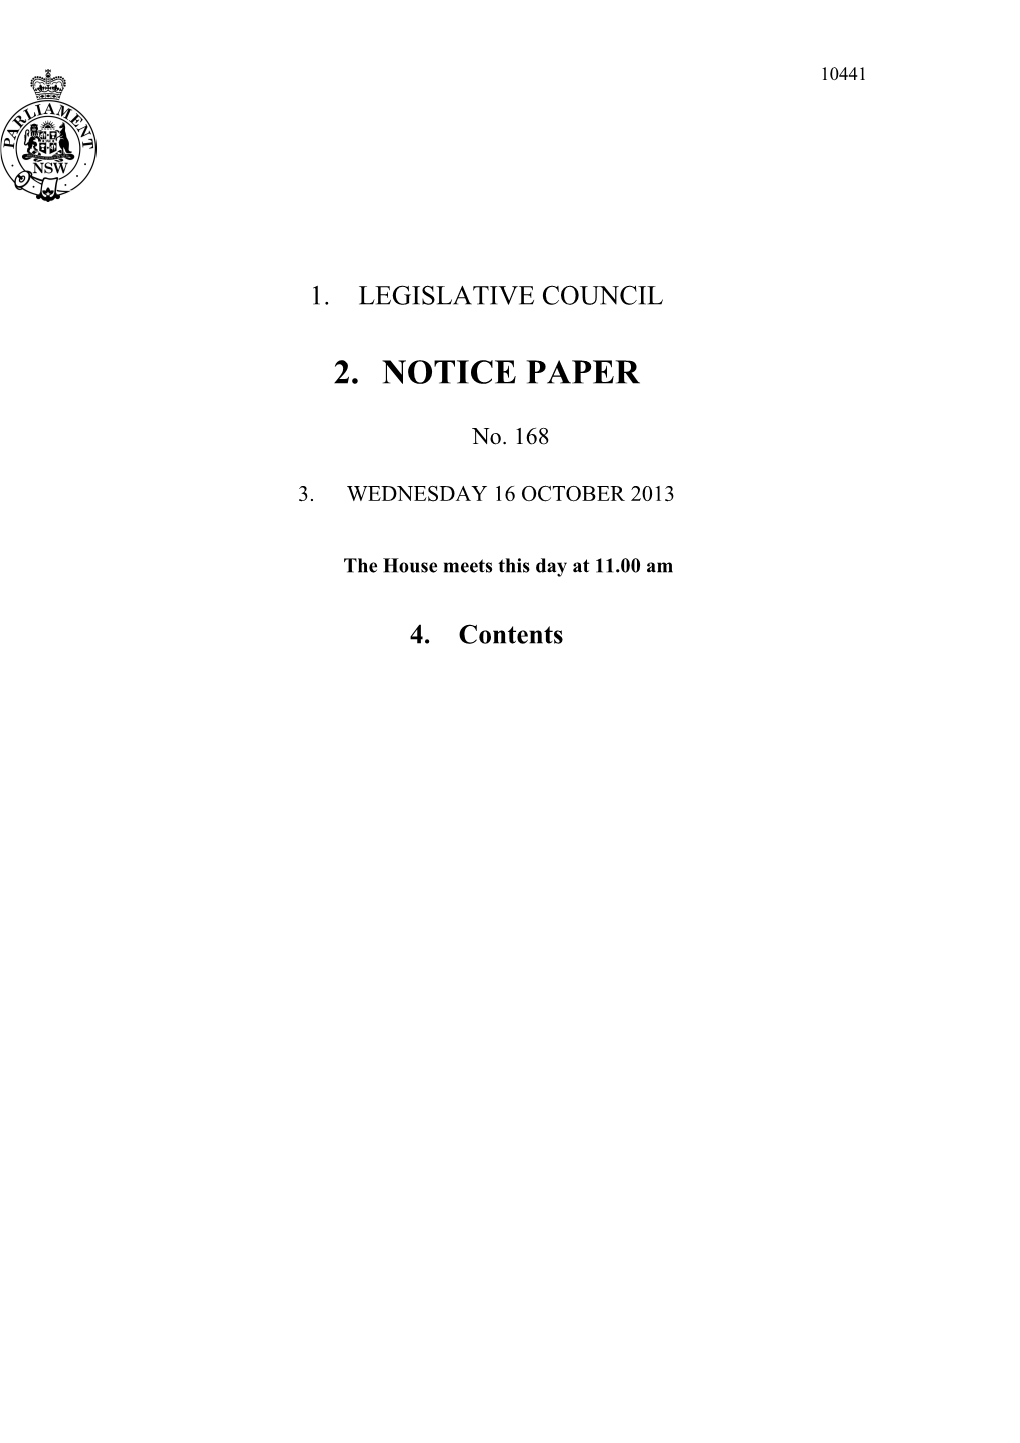 Legislative Council Notice Paper No. 168 Wednesday 16 October 2013